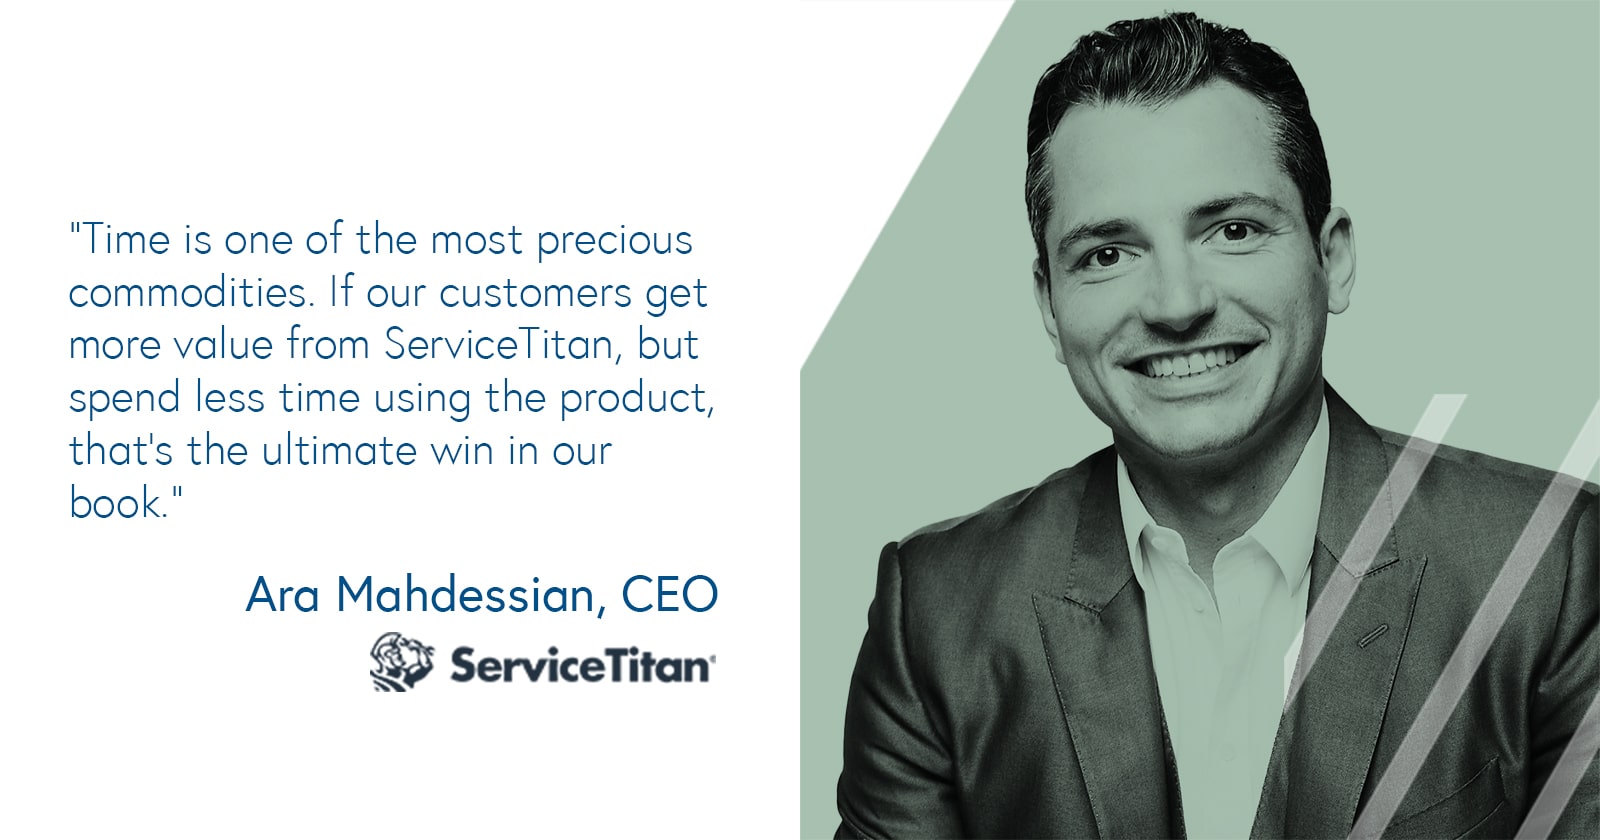 Ara Mahdessian, CEO of ServiceTitan on creating value for customers 